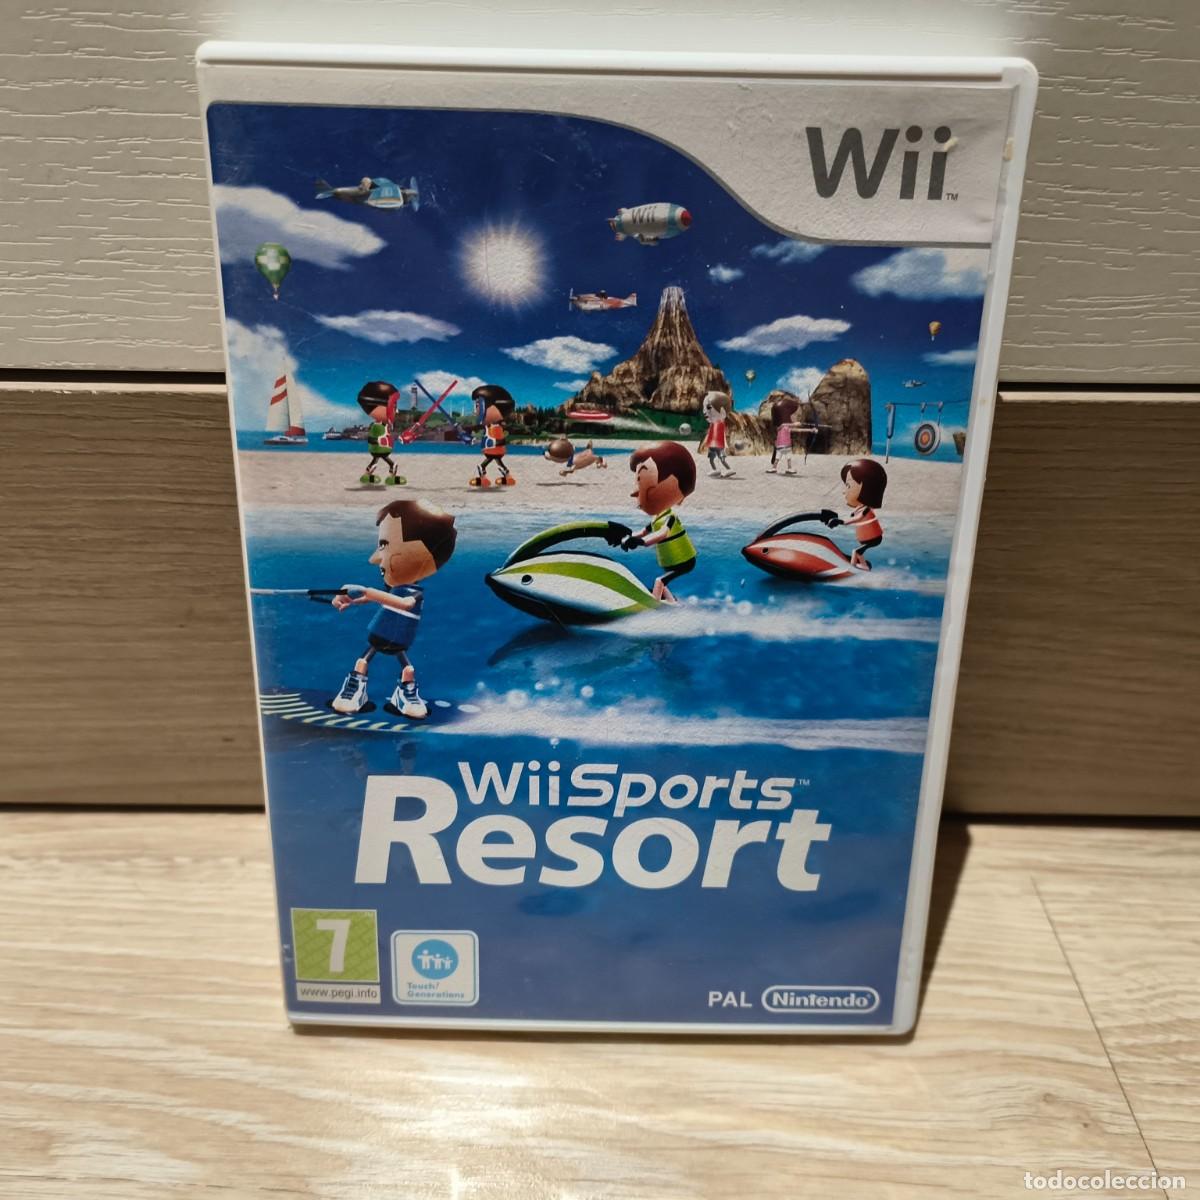 nintendo wii sports resort pal esp - Acquista Videogiochi e console  Nintendo Wii su todocoleccion